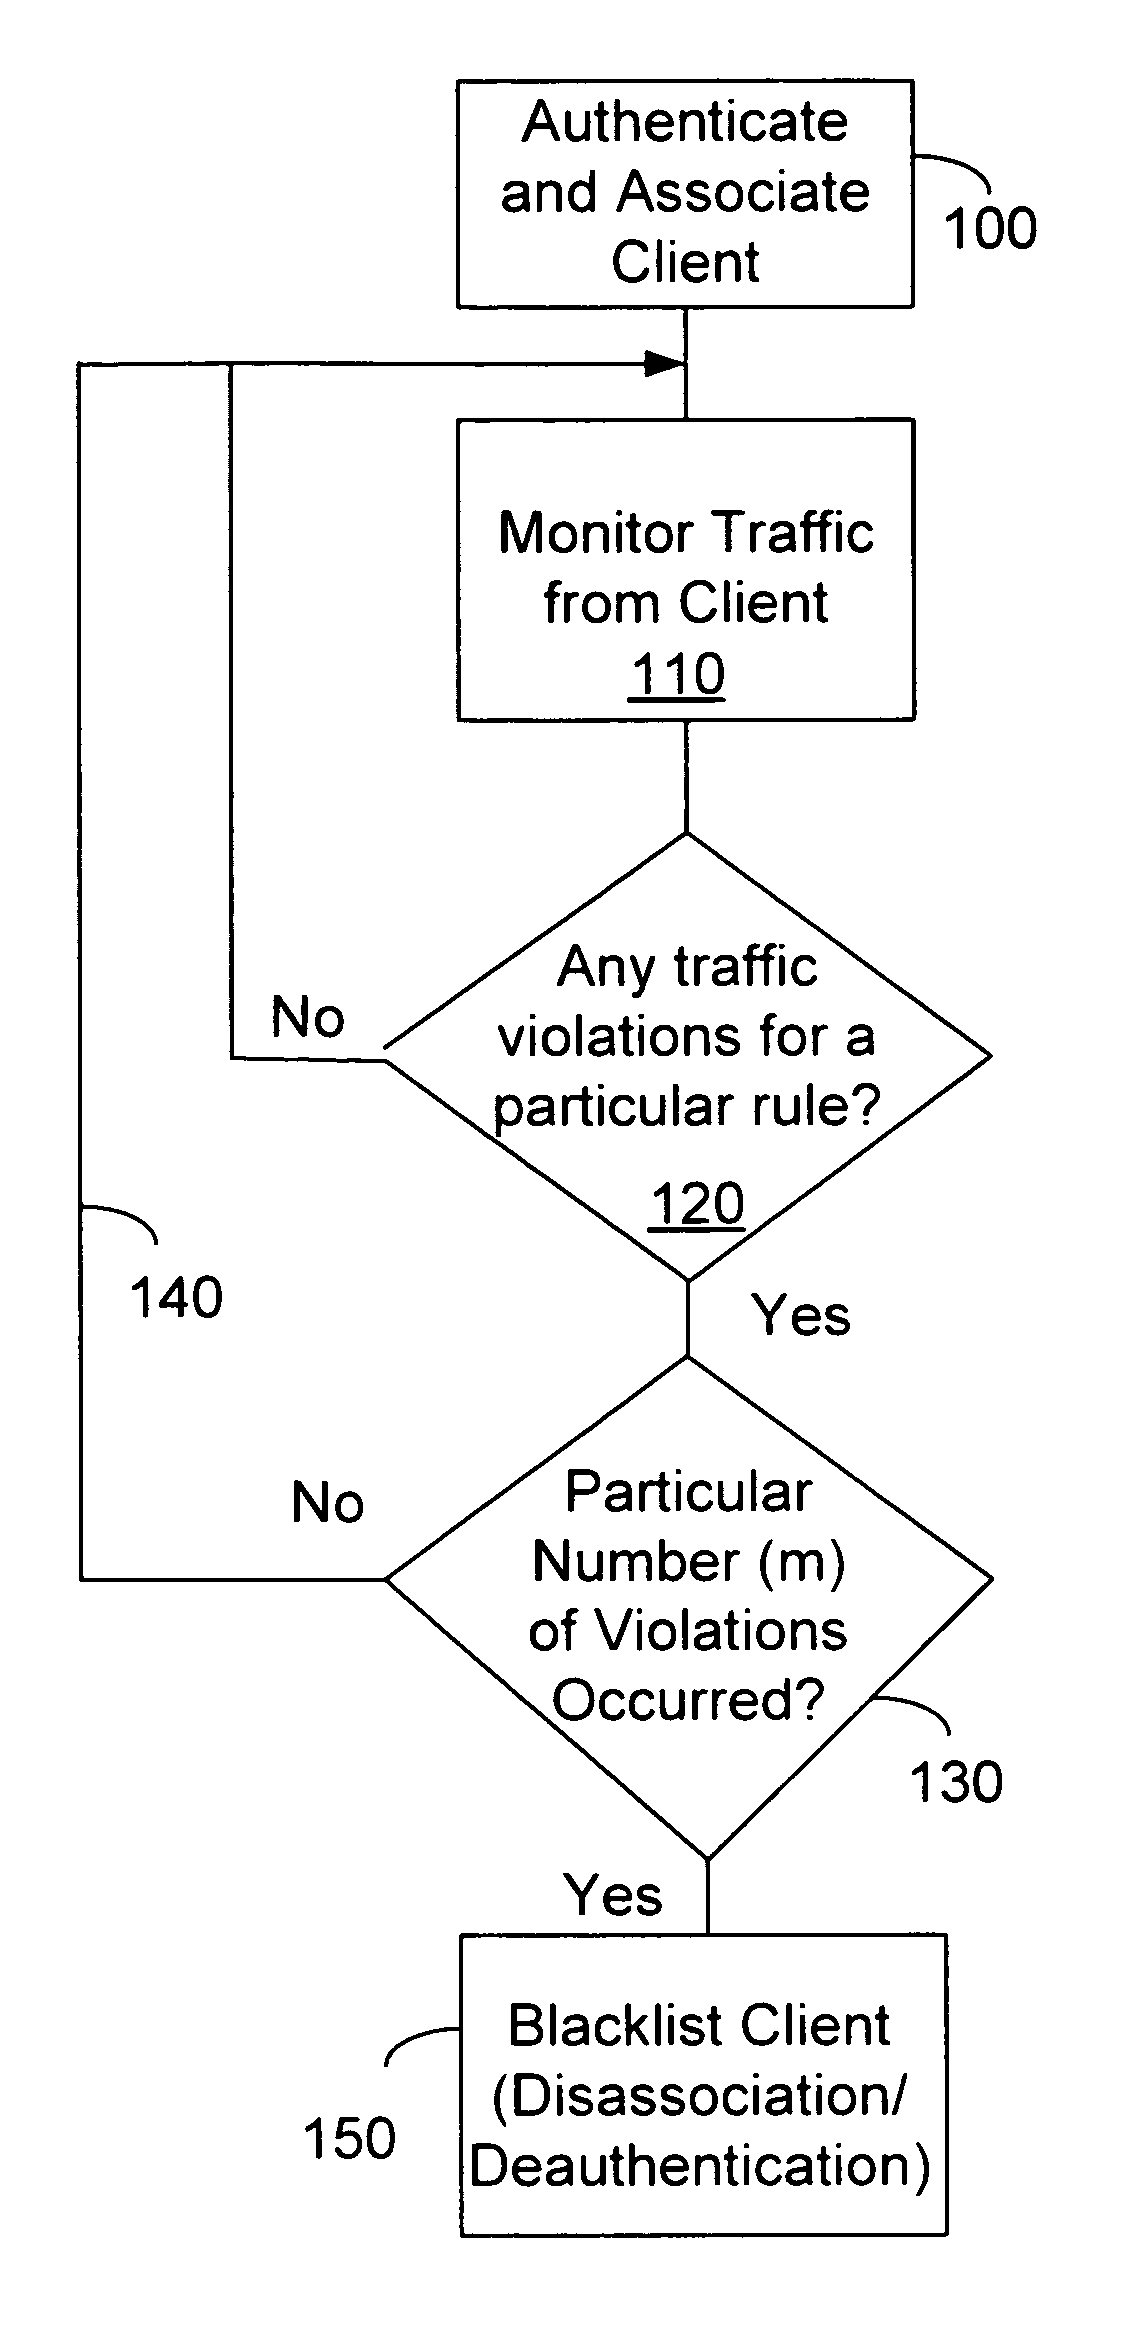 Blacklisting based on a traffic rule violation